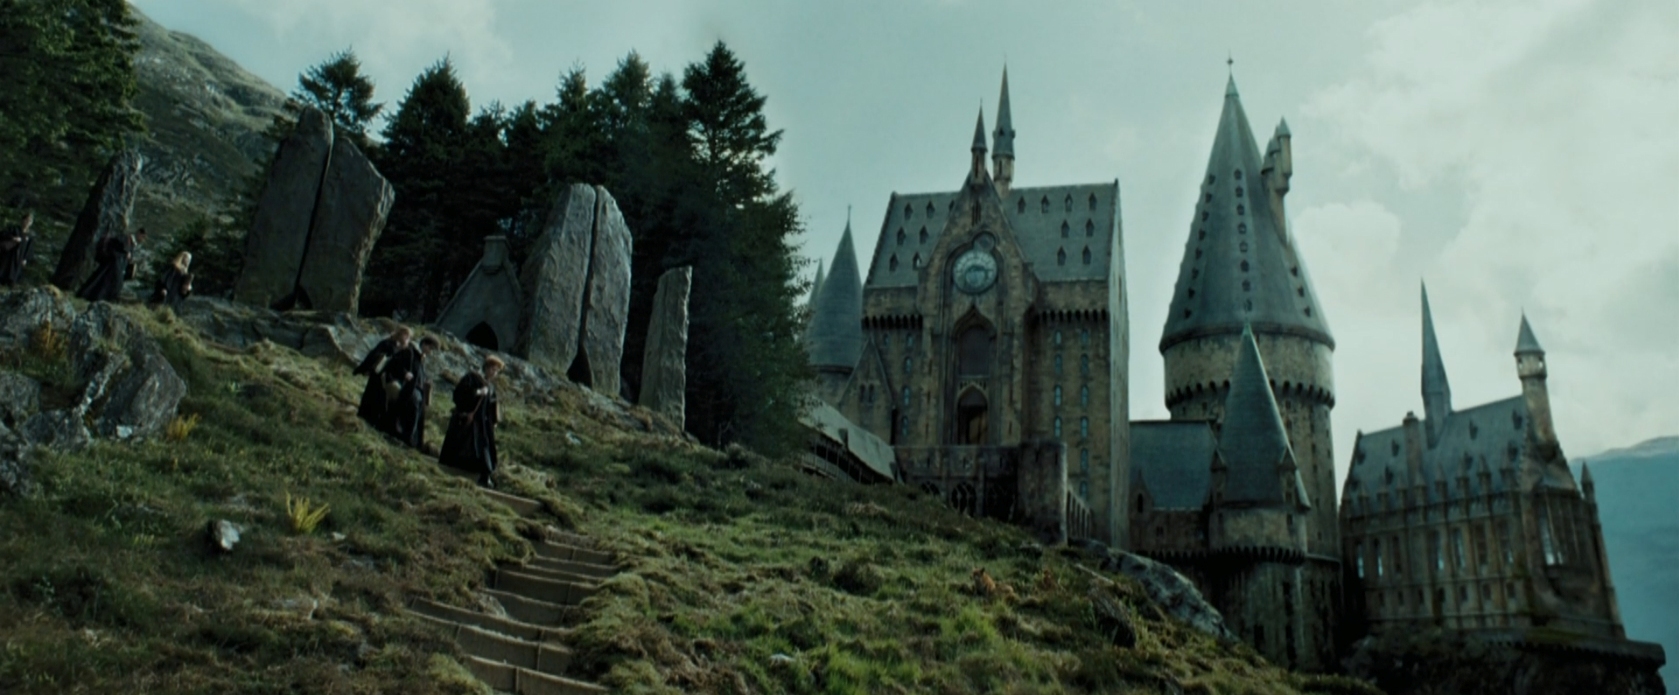 Harry Potter and the Prisoner of Azkaban (2004).  Image Courtesy of wikia.com